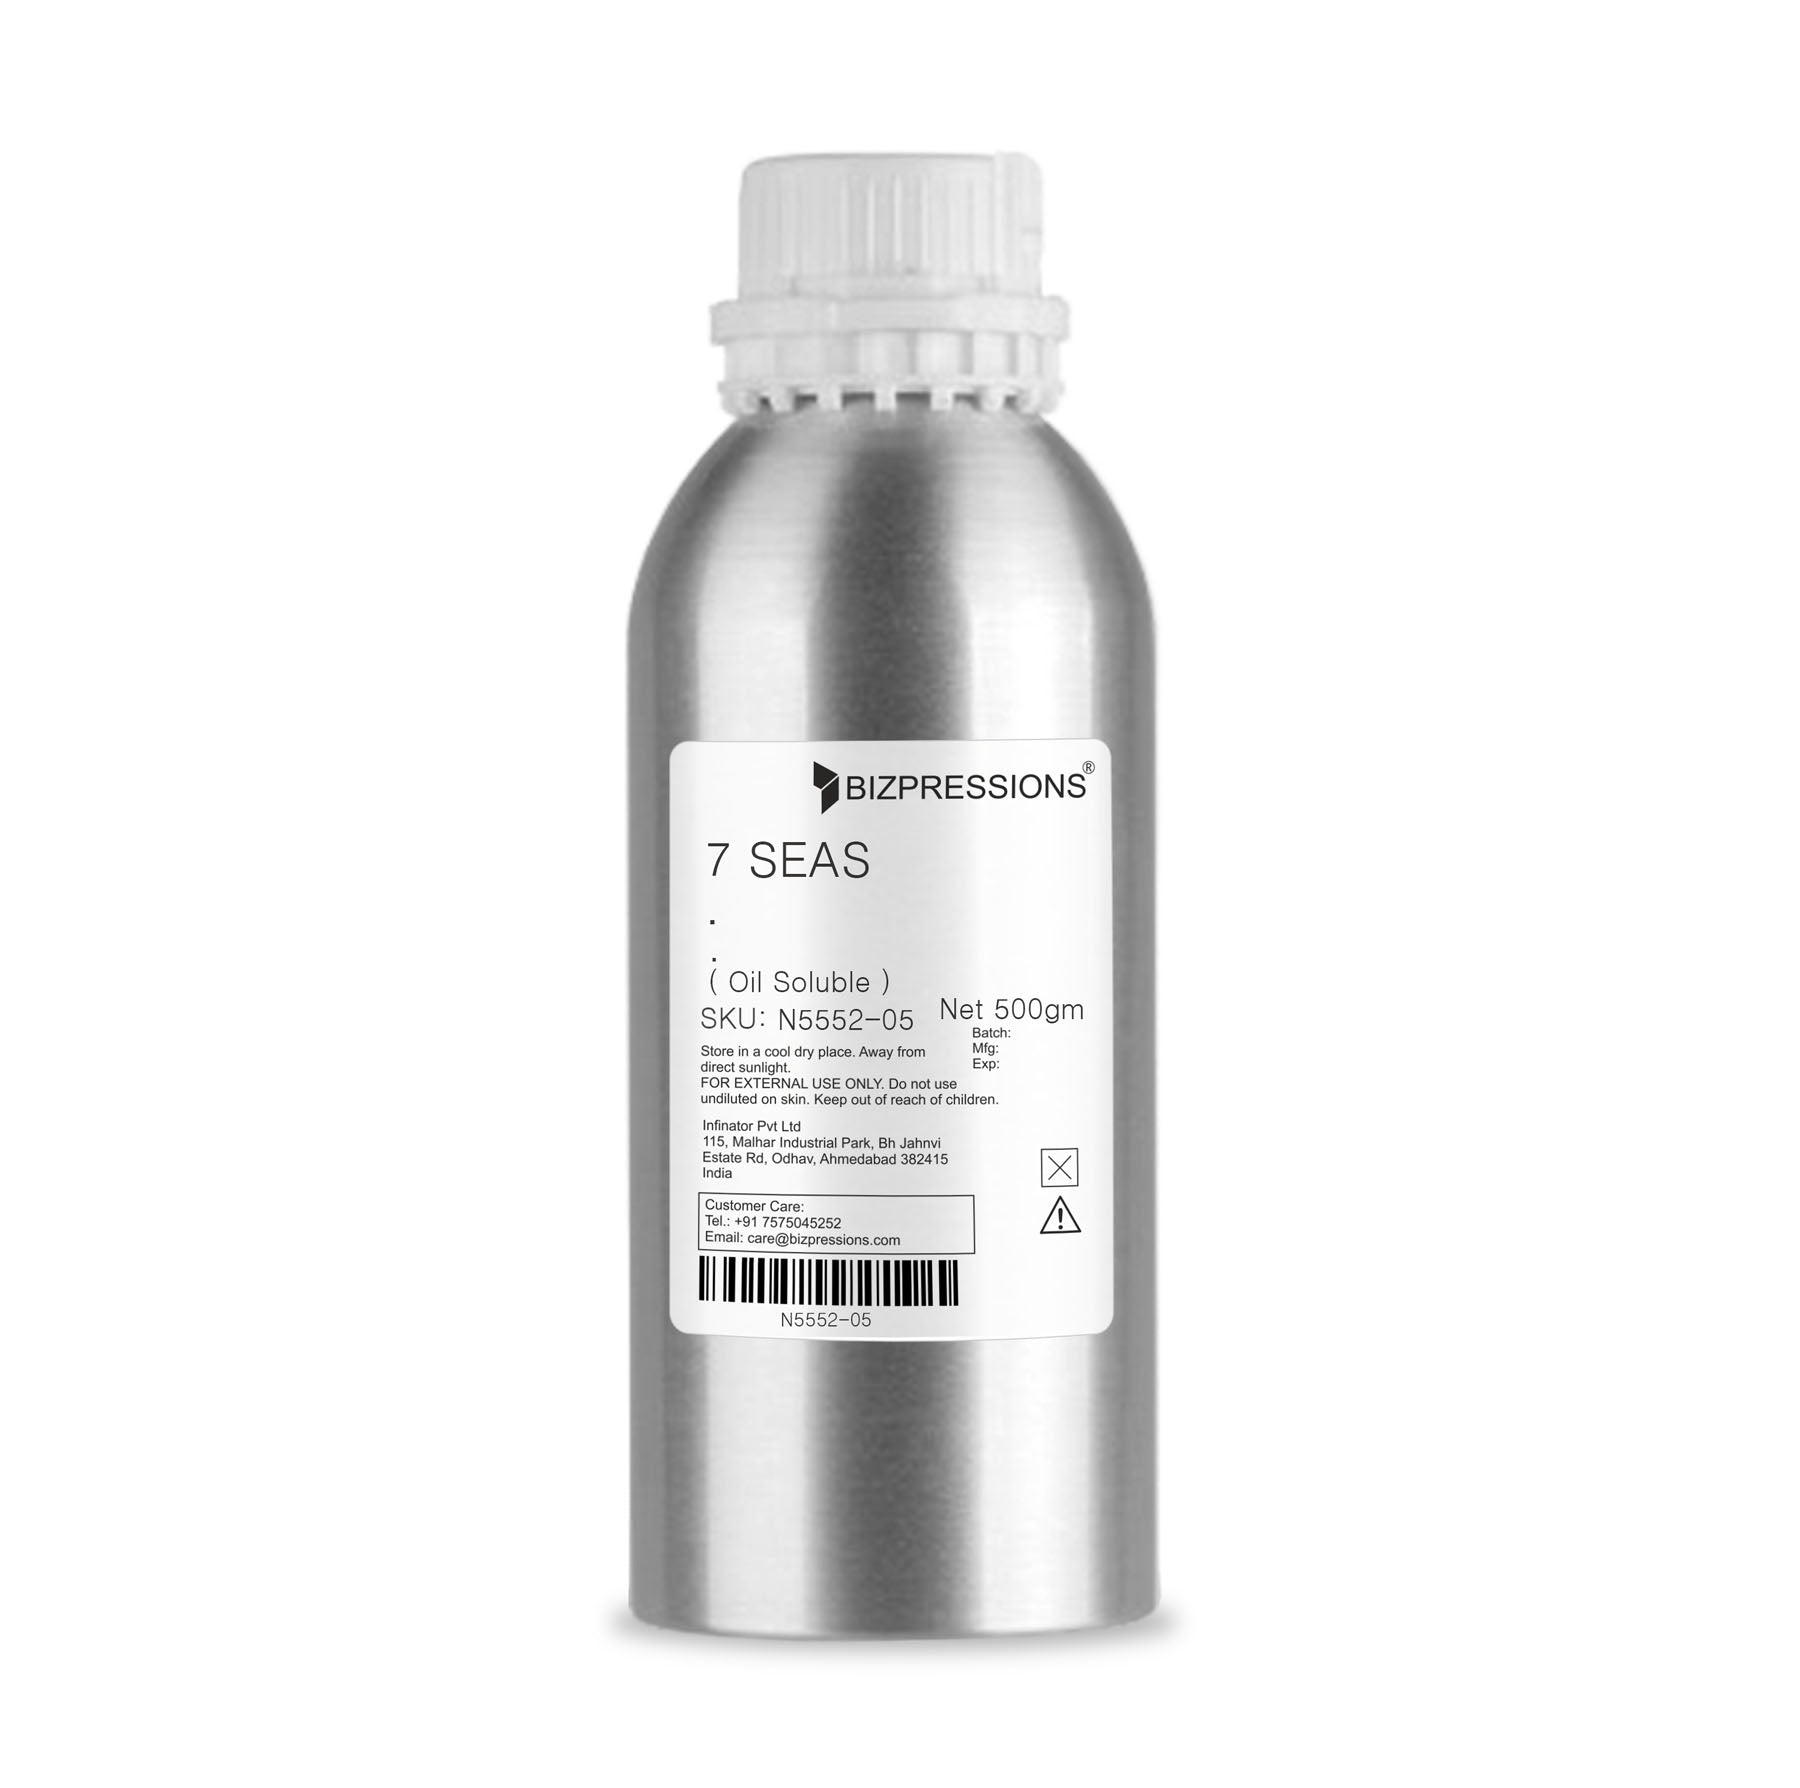 7 SEAS - Fragrance ( Oil Soluble ) - 500 gm